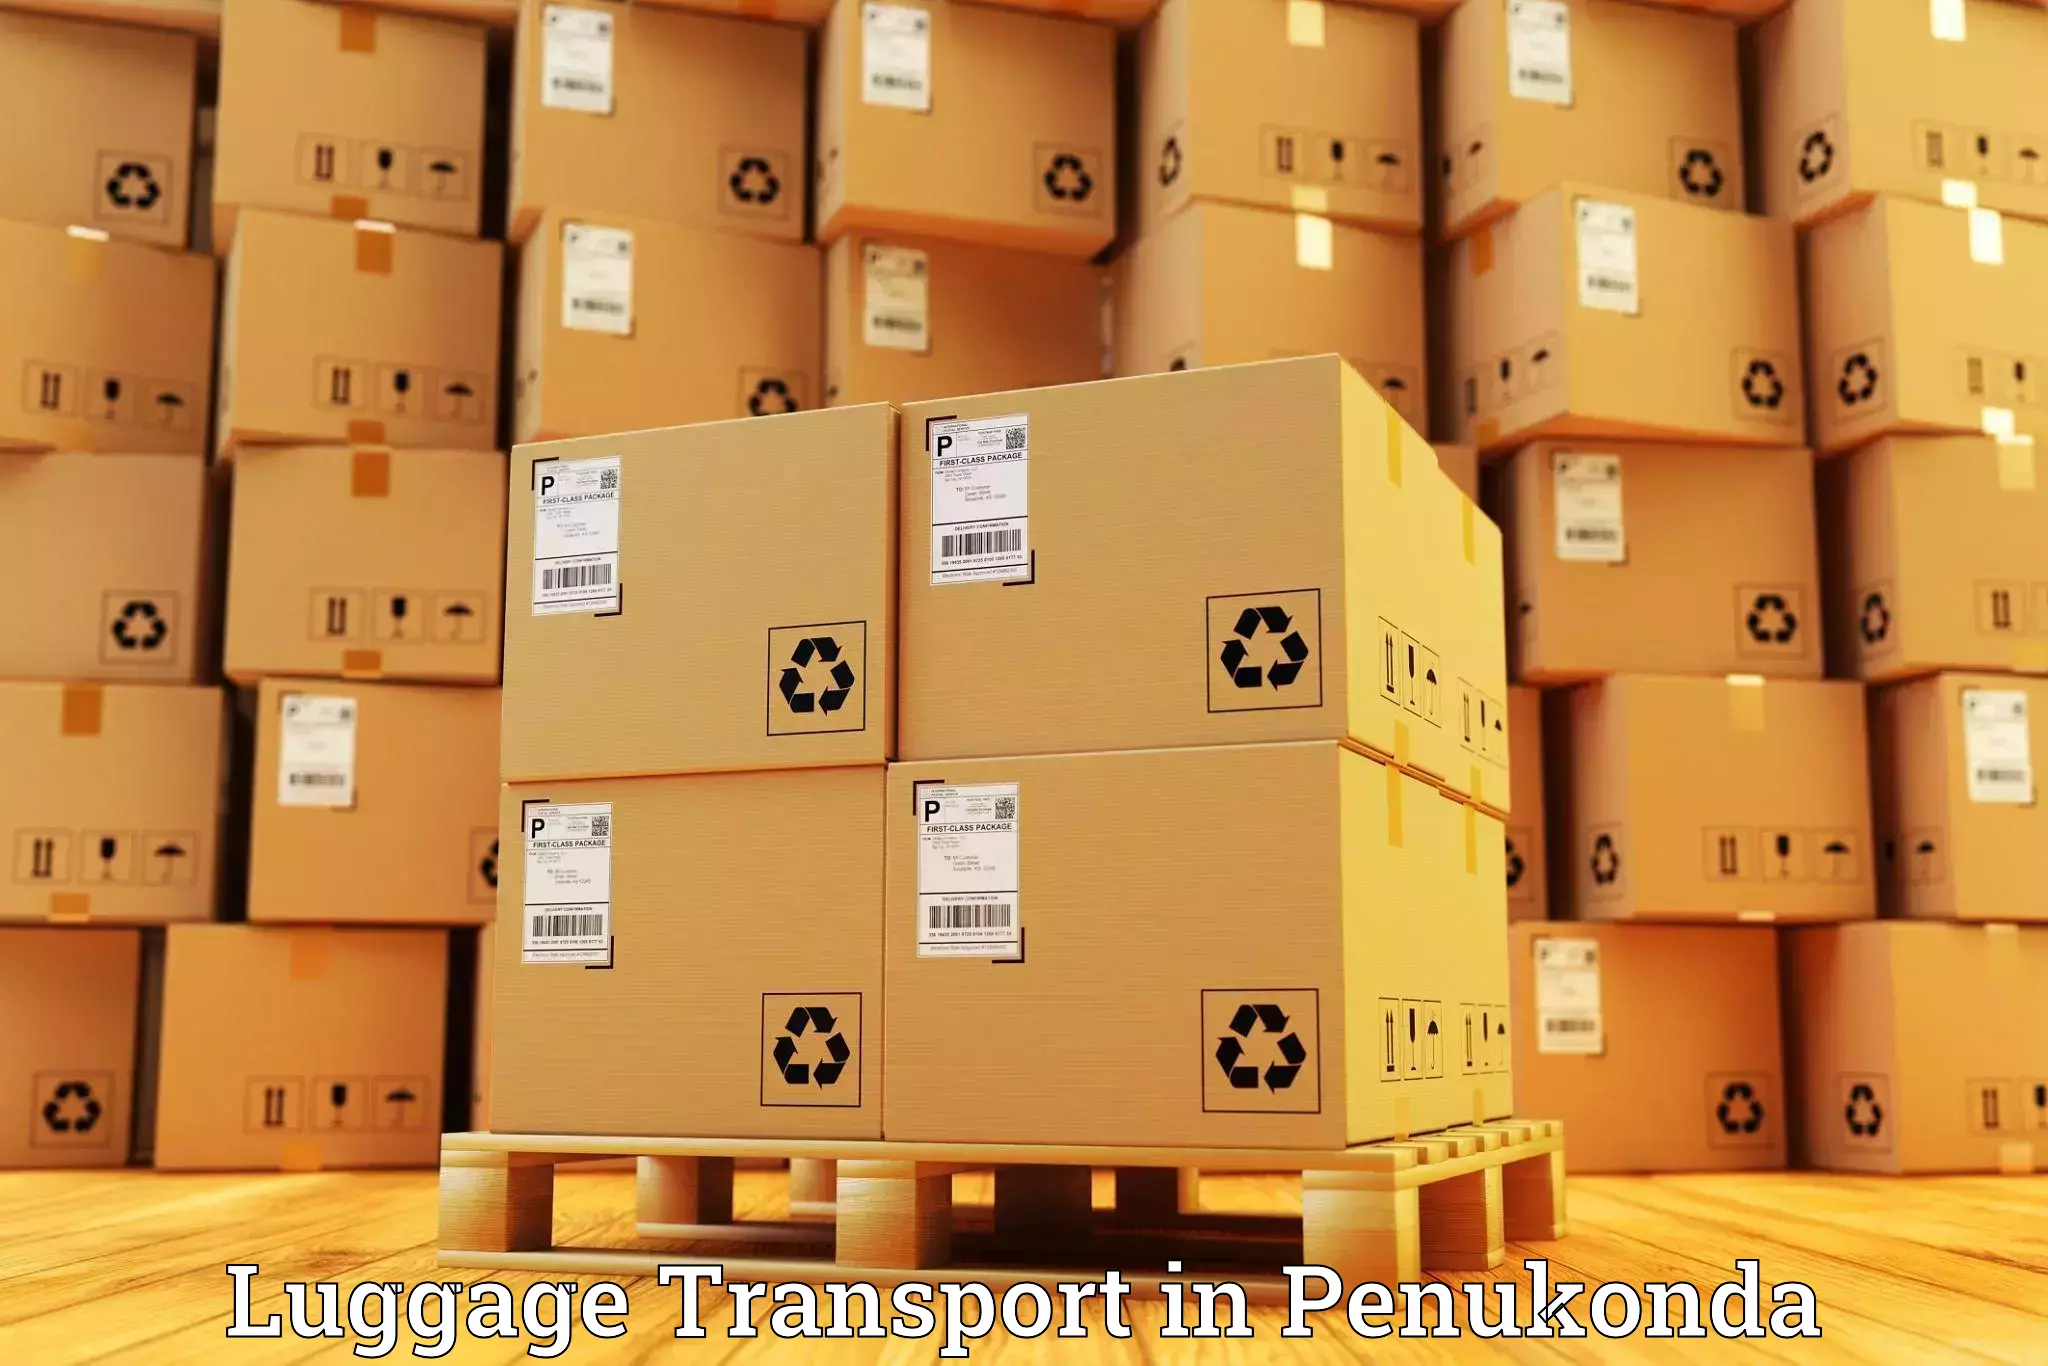 Luggage transport service in Penukonda